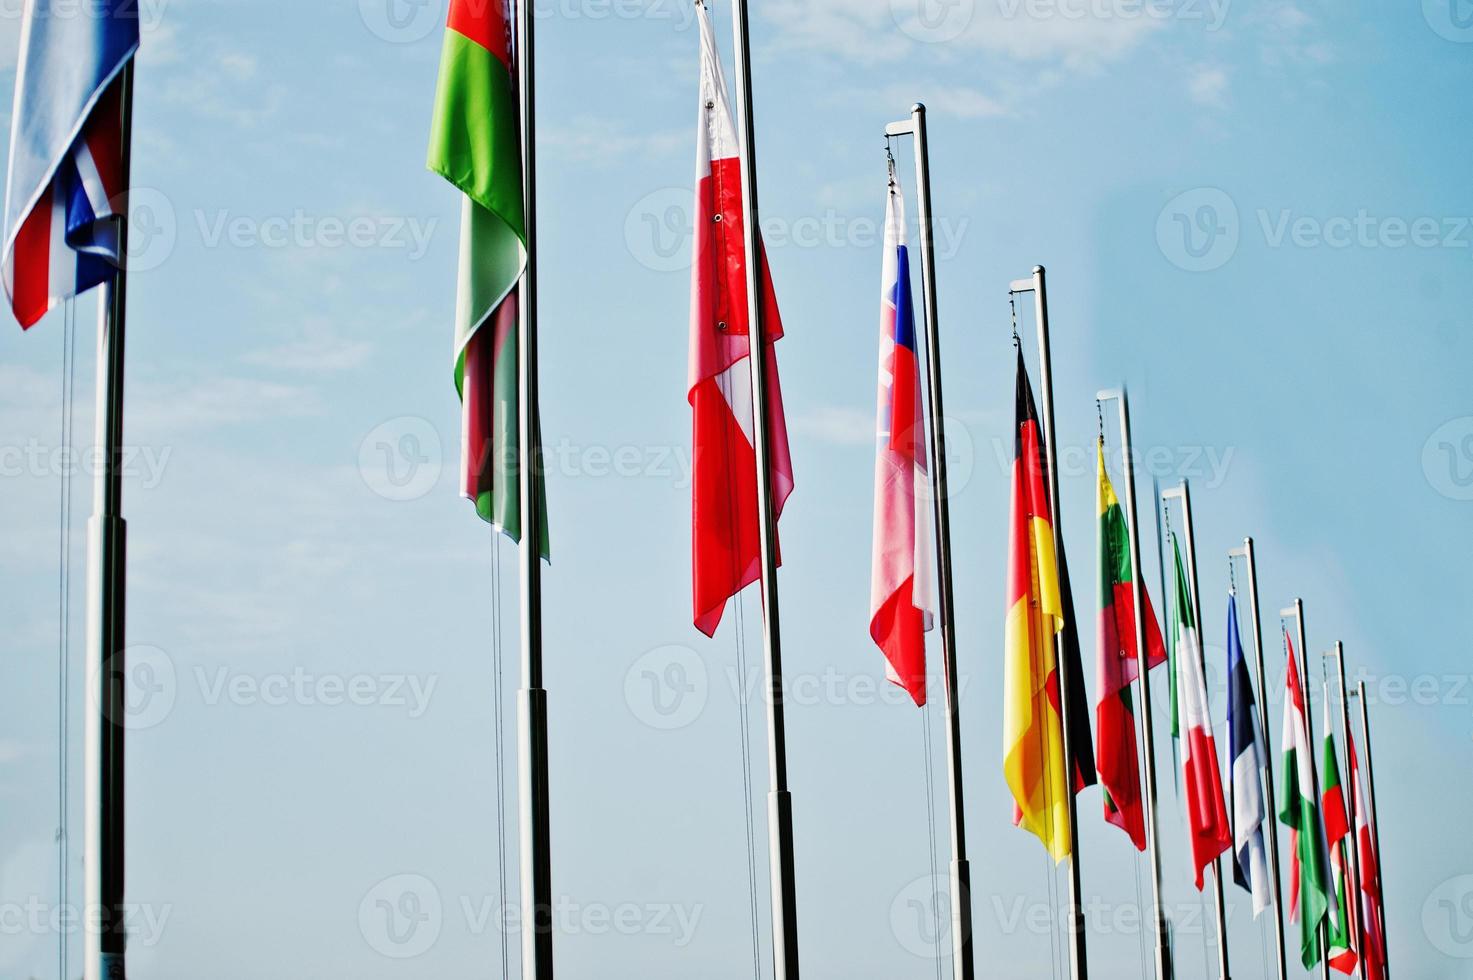 muitas bandeiras nacionais de diferentes países. foto